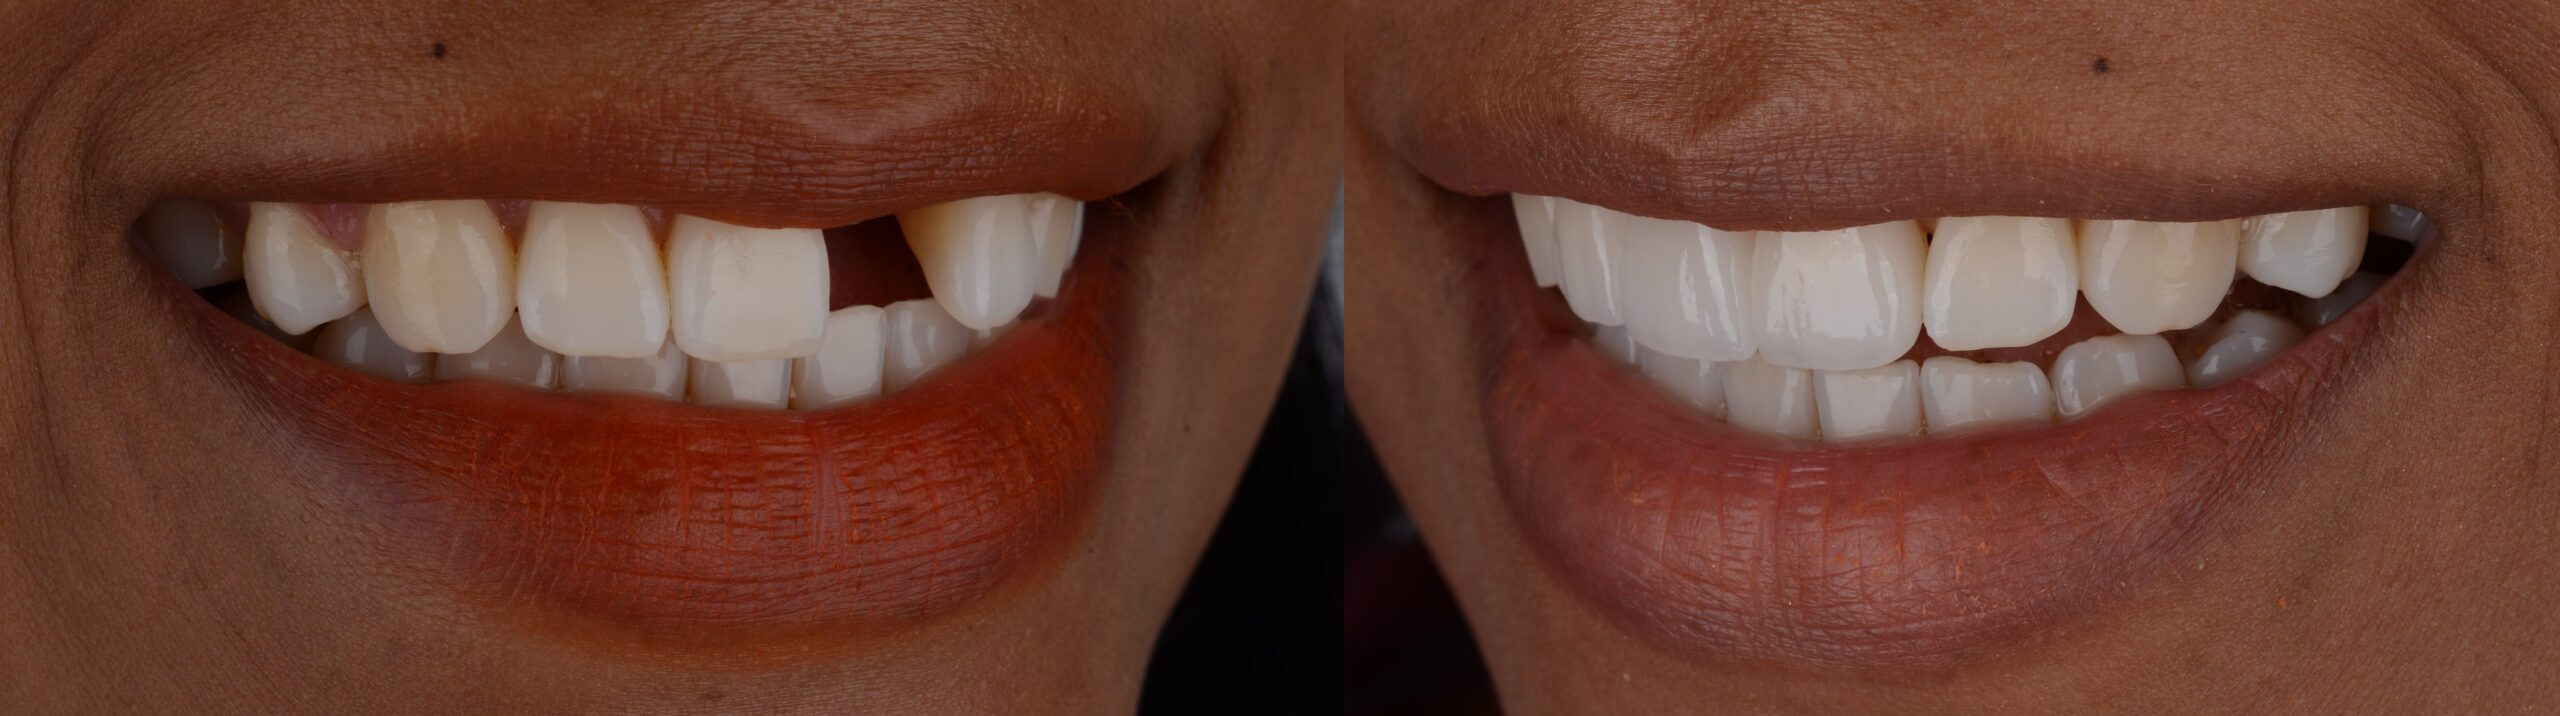 Dental Bridge Before & After Photo